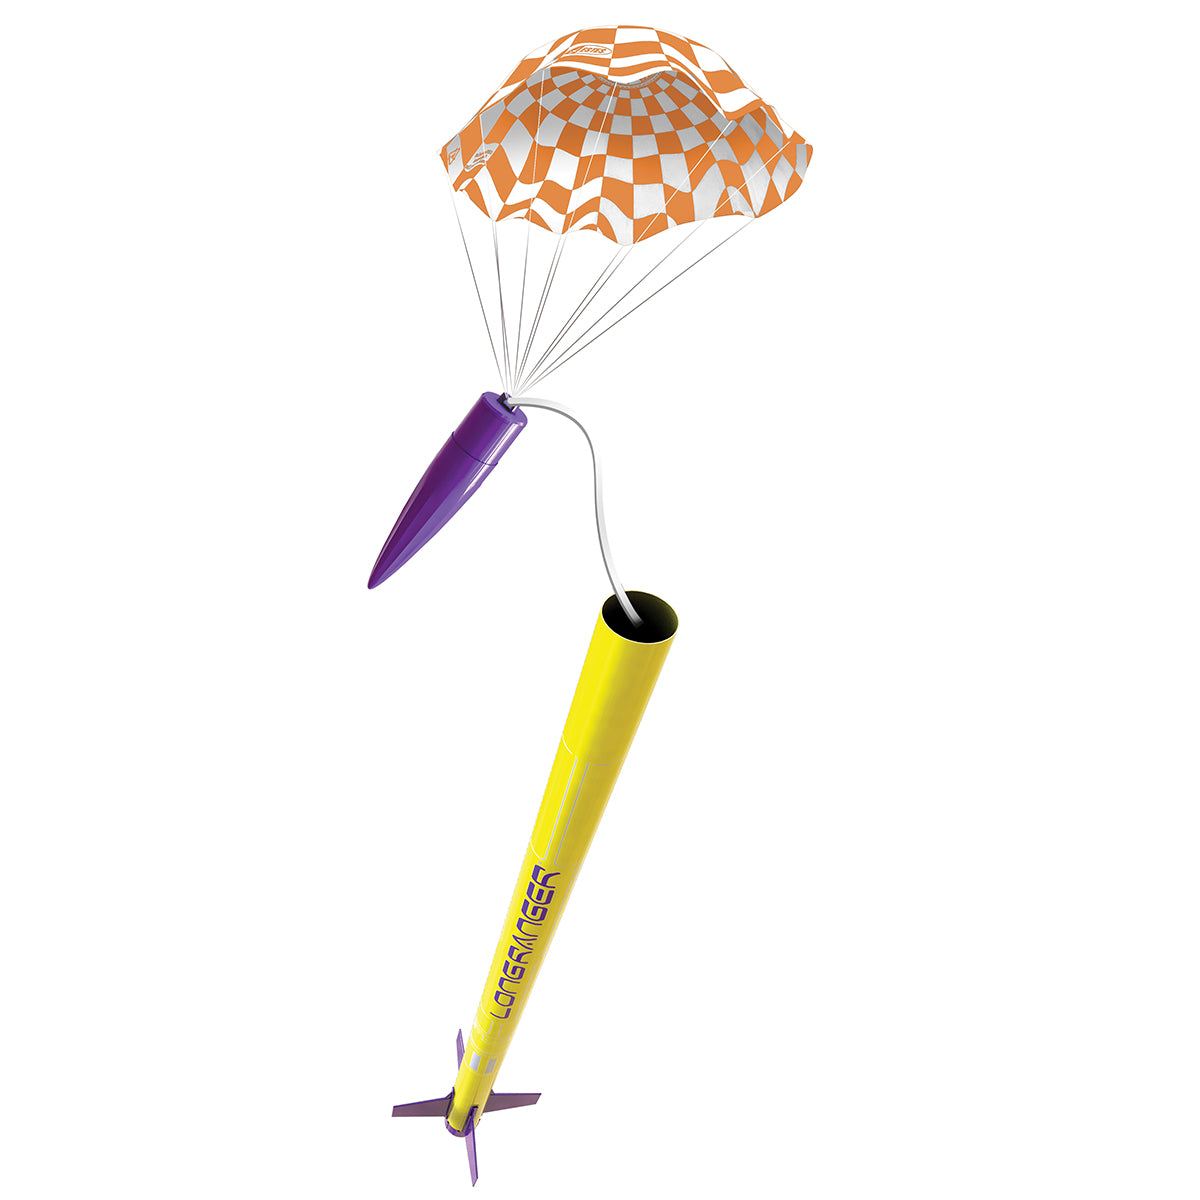 Long Ranger Rocket Parachute 